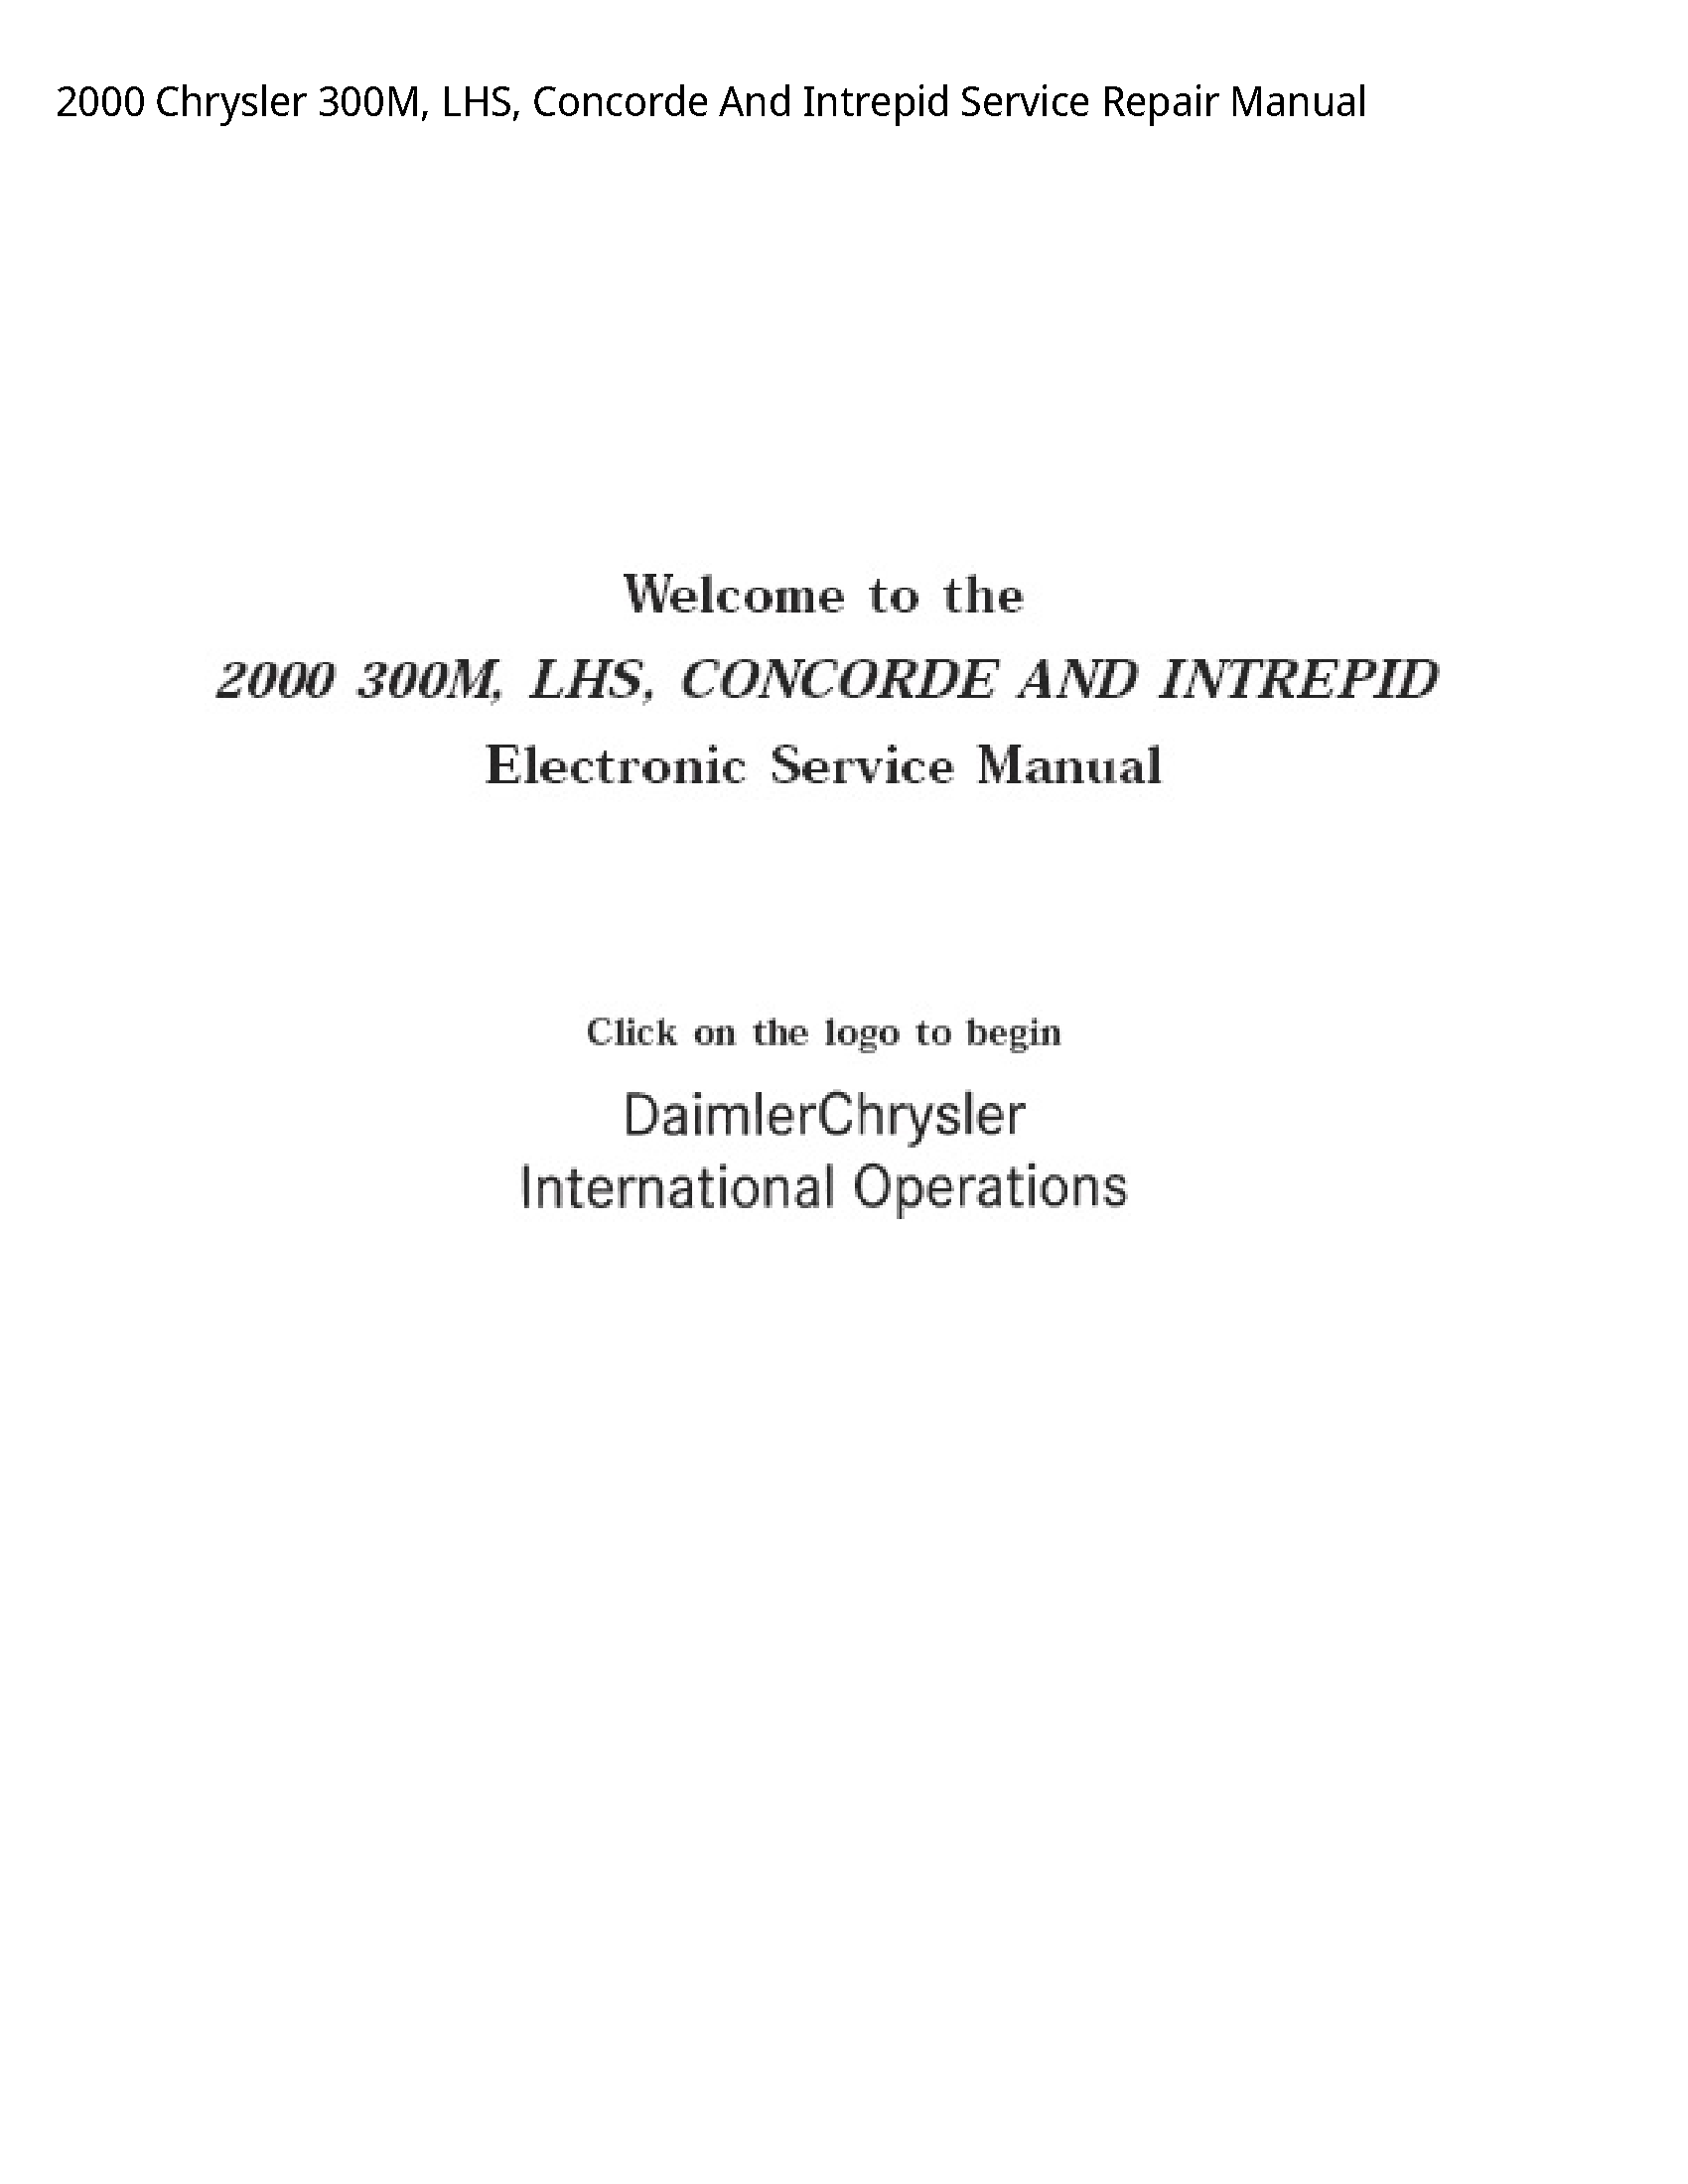 Chrysler 300M LHS manual